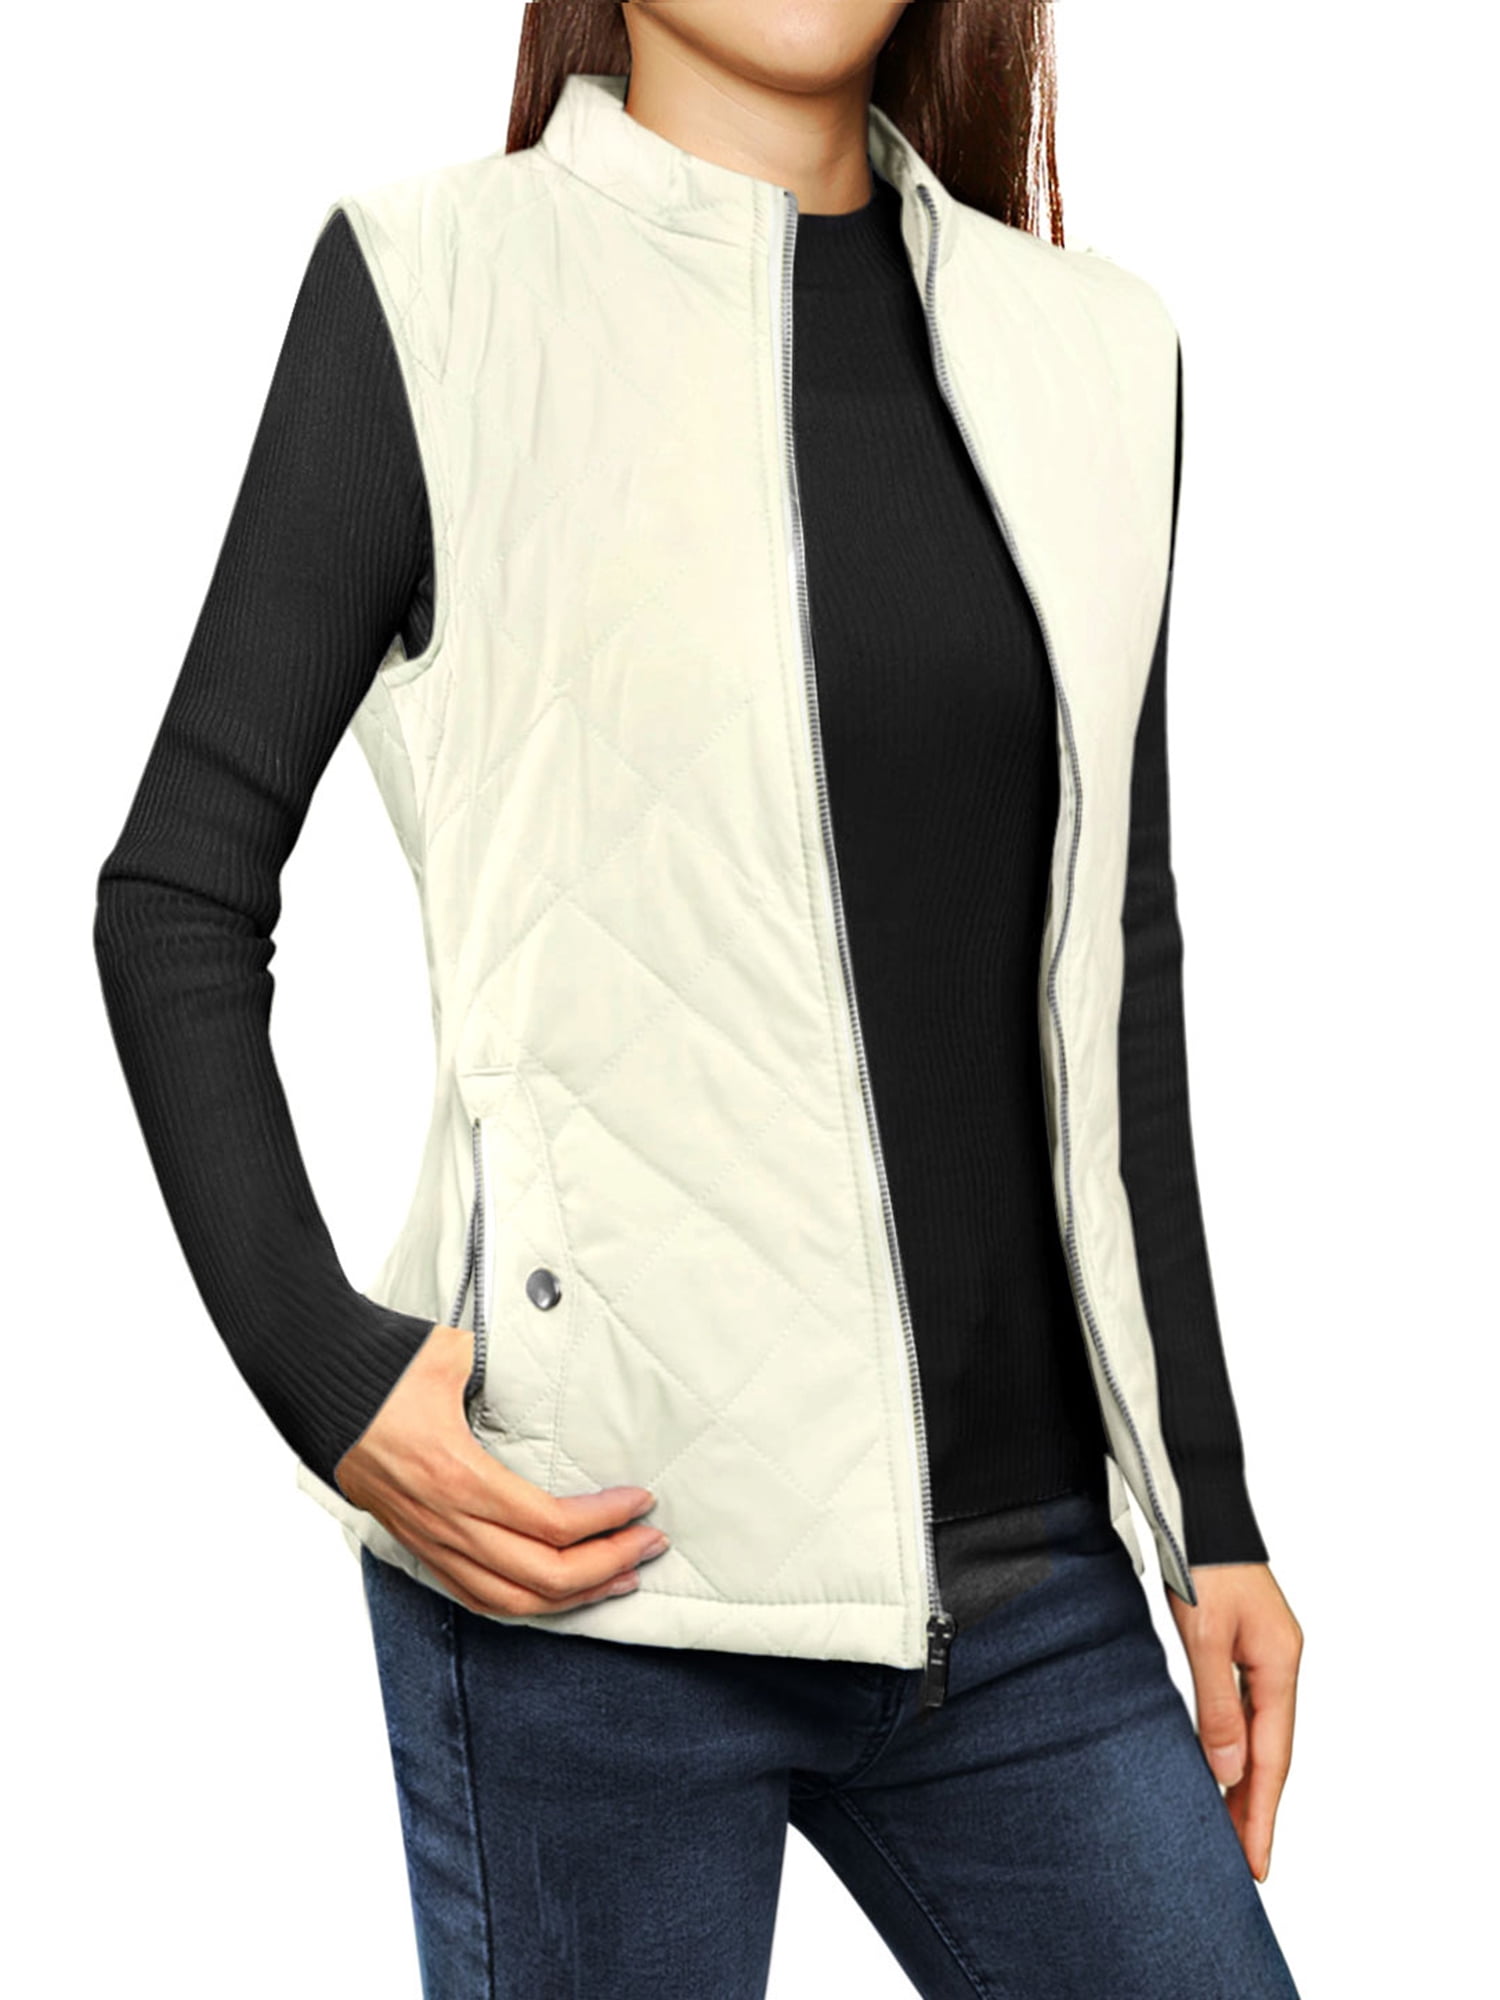 Allegra K Women's Body Warmer Stand Collar Lightweight Quilted Zip Jacket Gilet